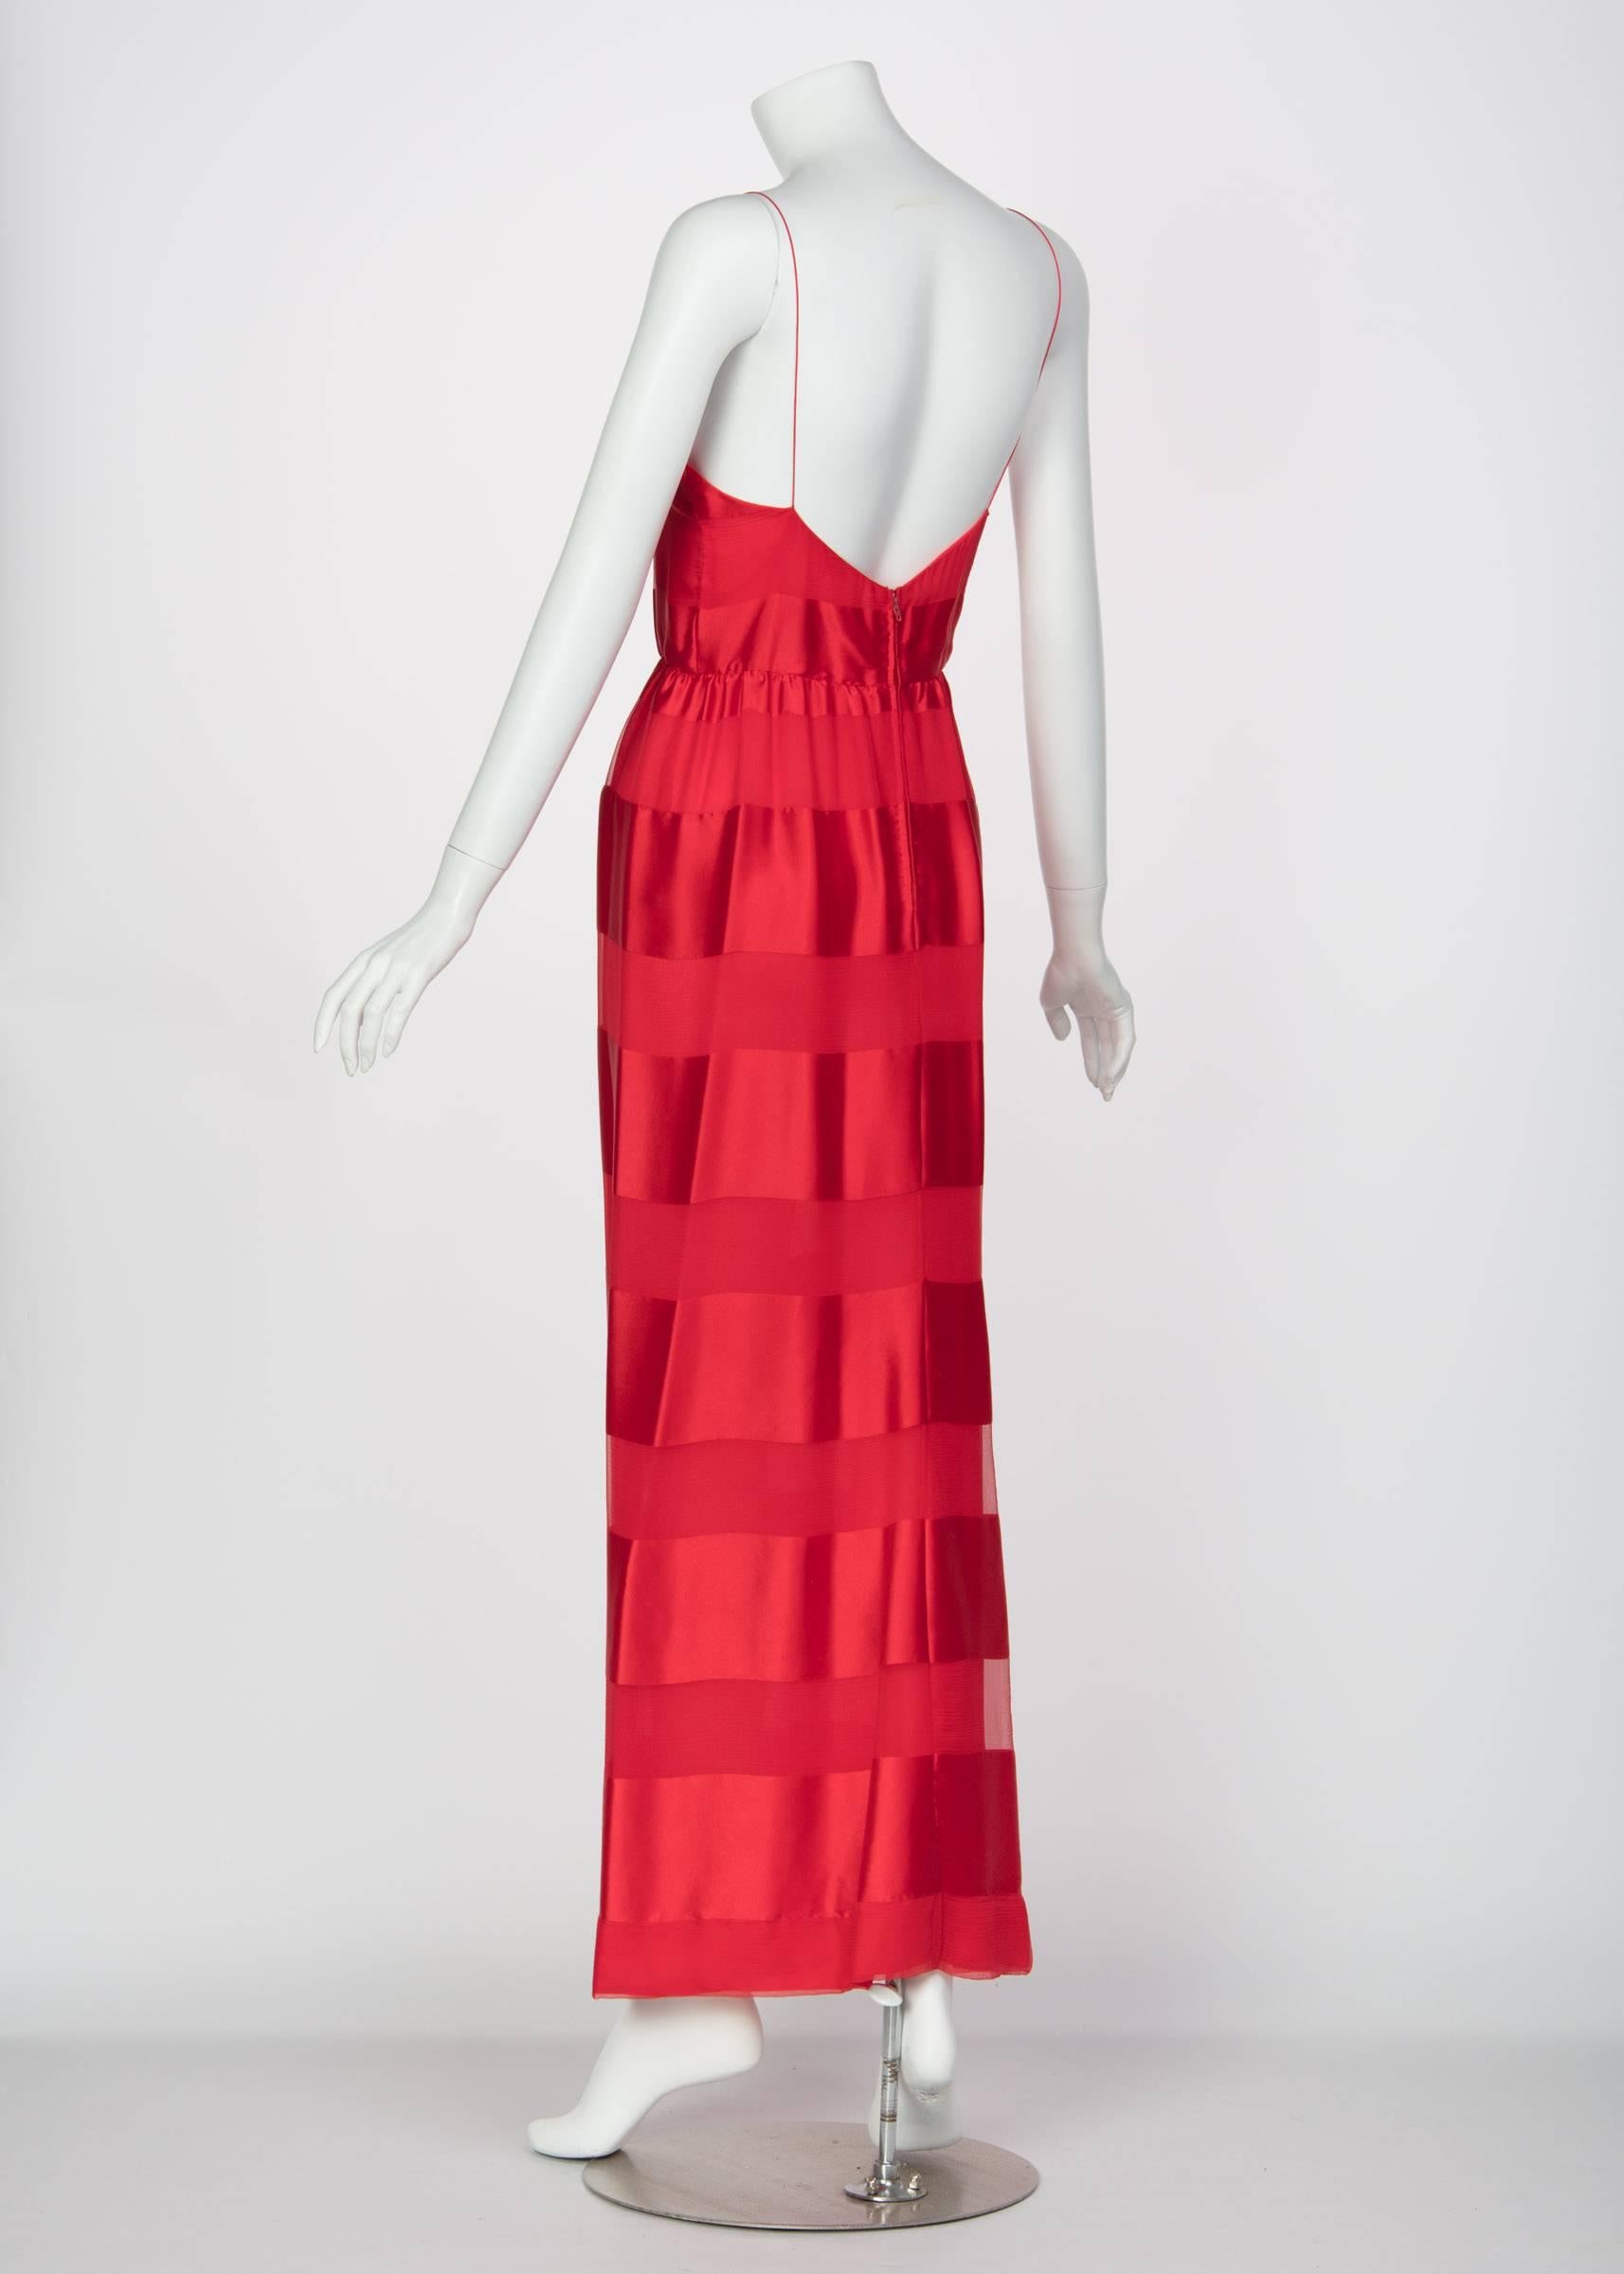 Bill Blass Red Silk Sheer Striped Maxi Column Dress Draped Overlay, 1970s  3